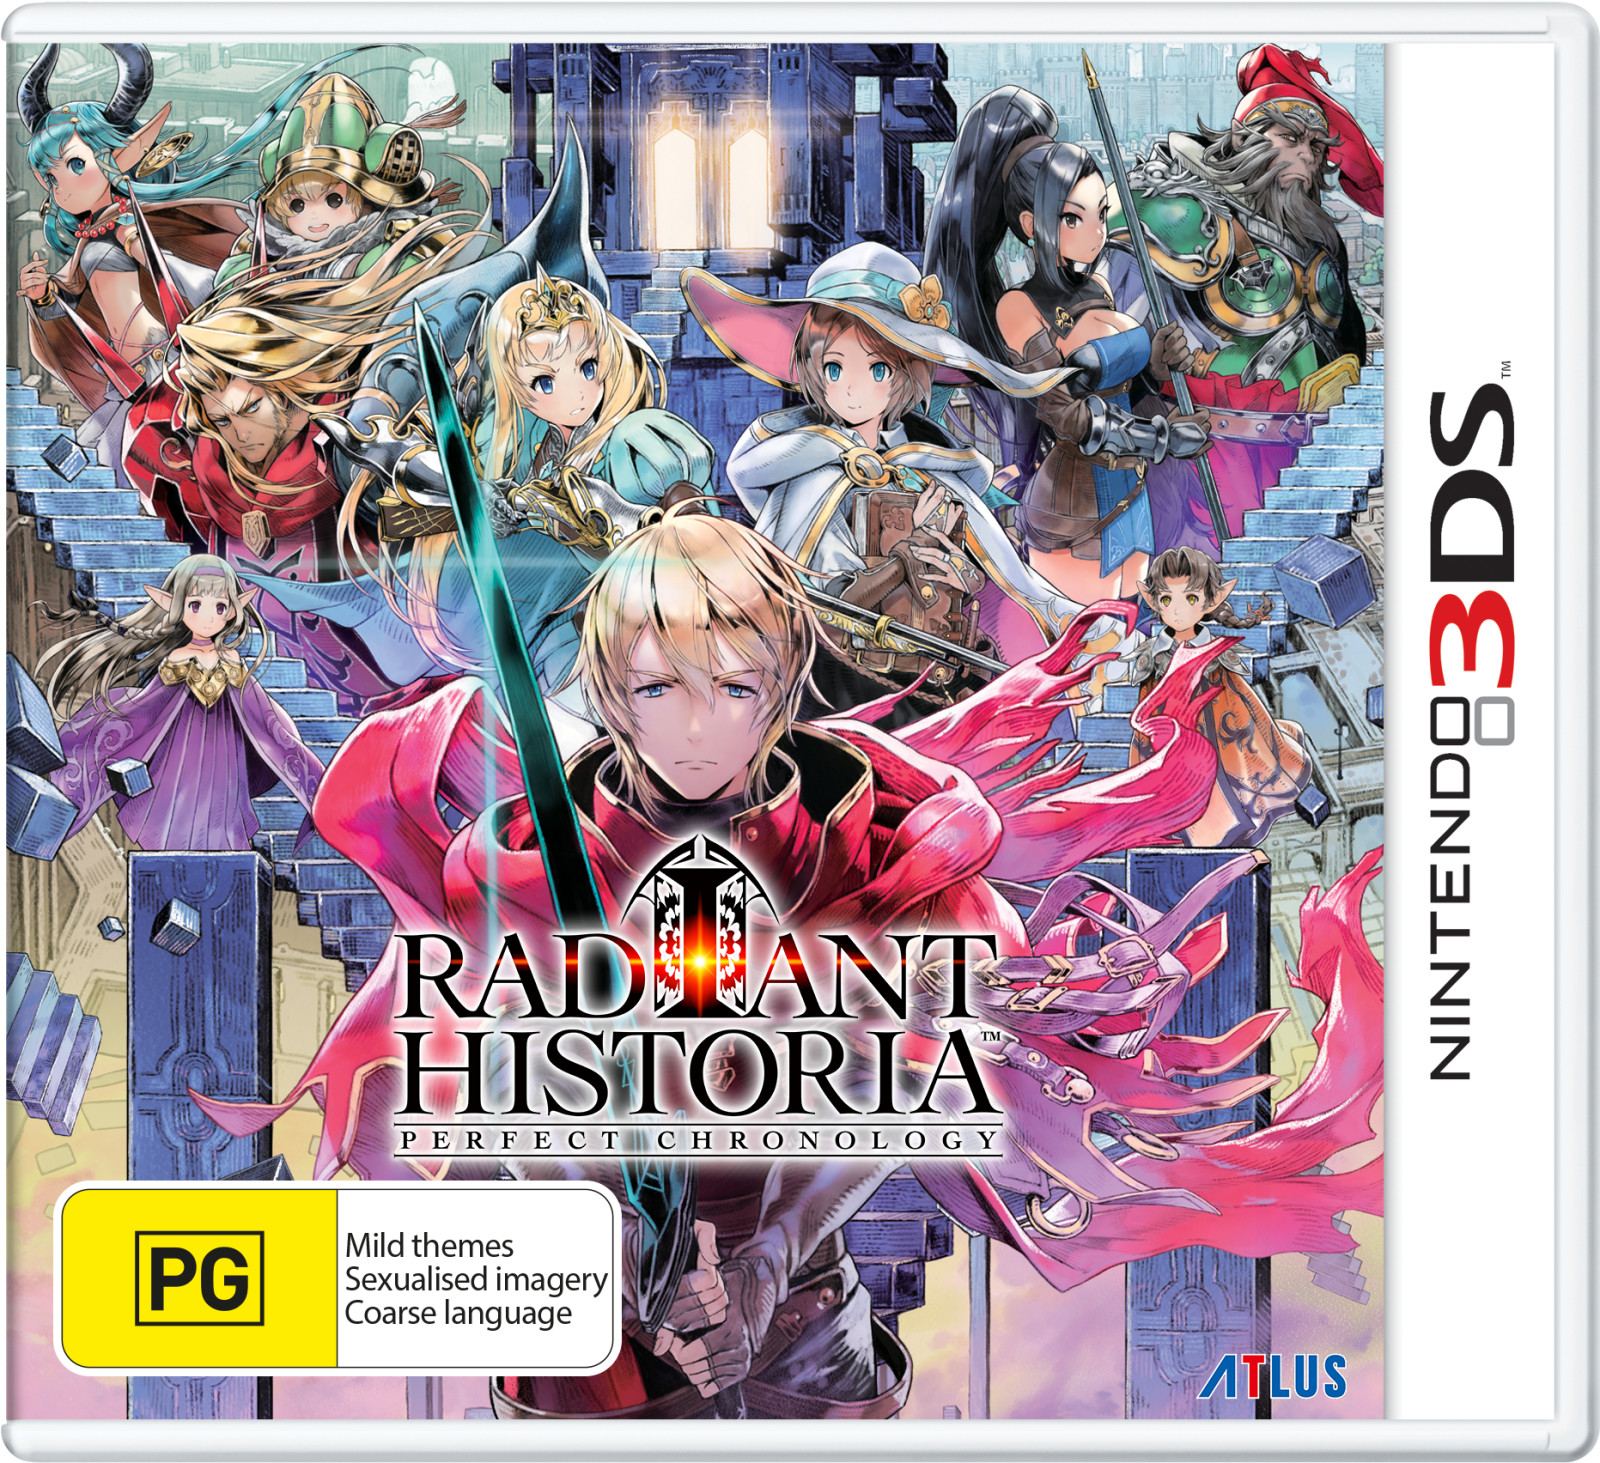  Radiant Historia: Perfect Chronology - Nintendo 3DS